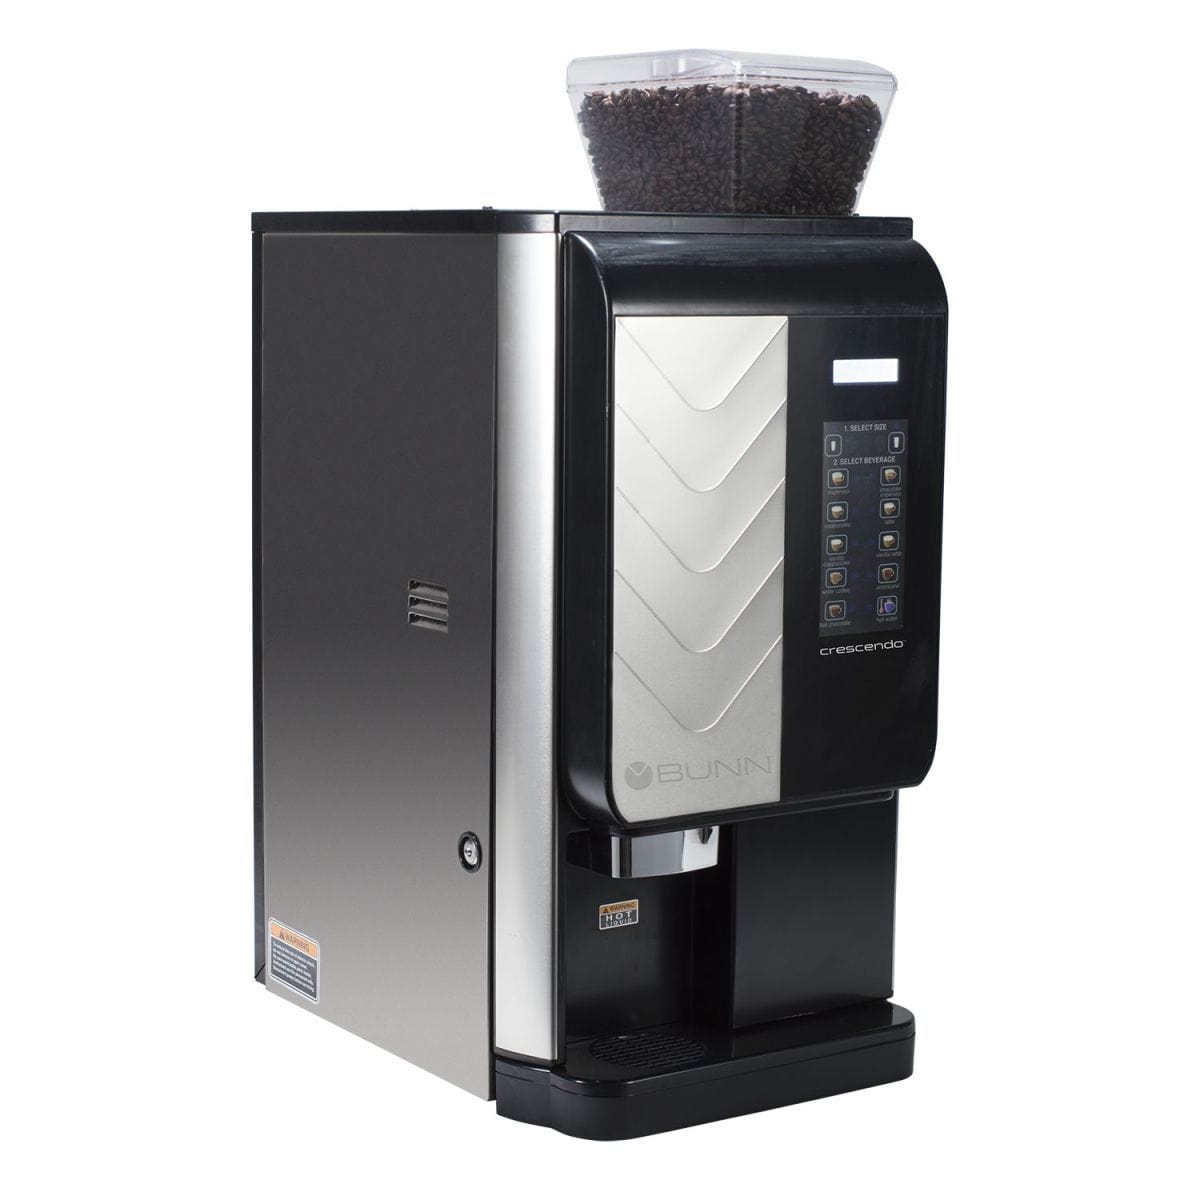 Bean to Cup Espresso Machine 1kg Coffee Subscription Bundle